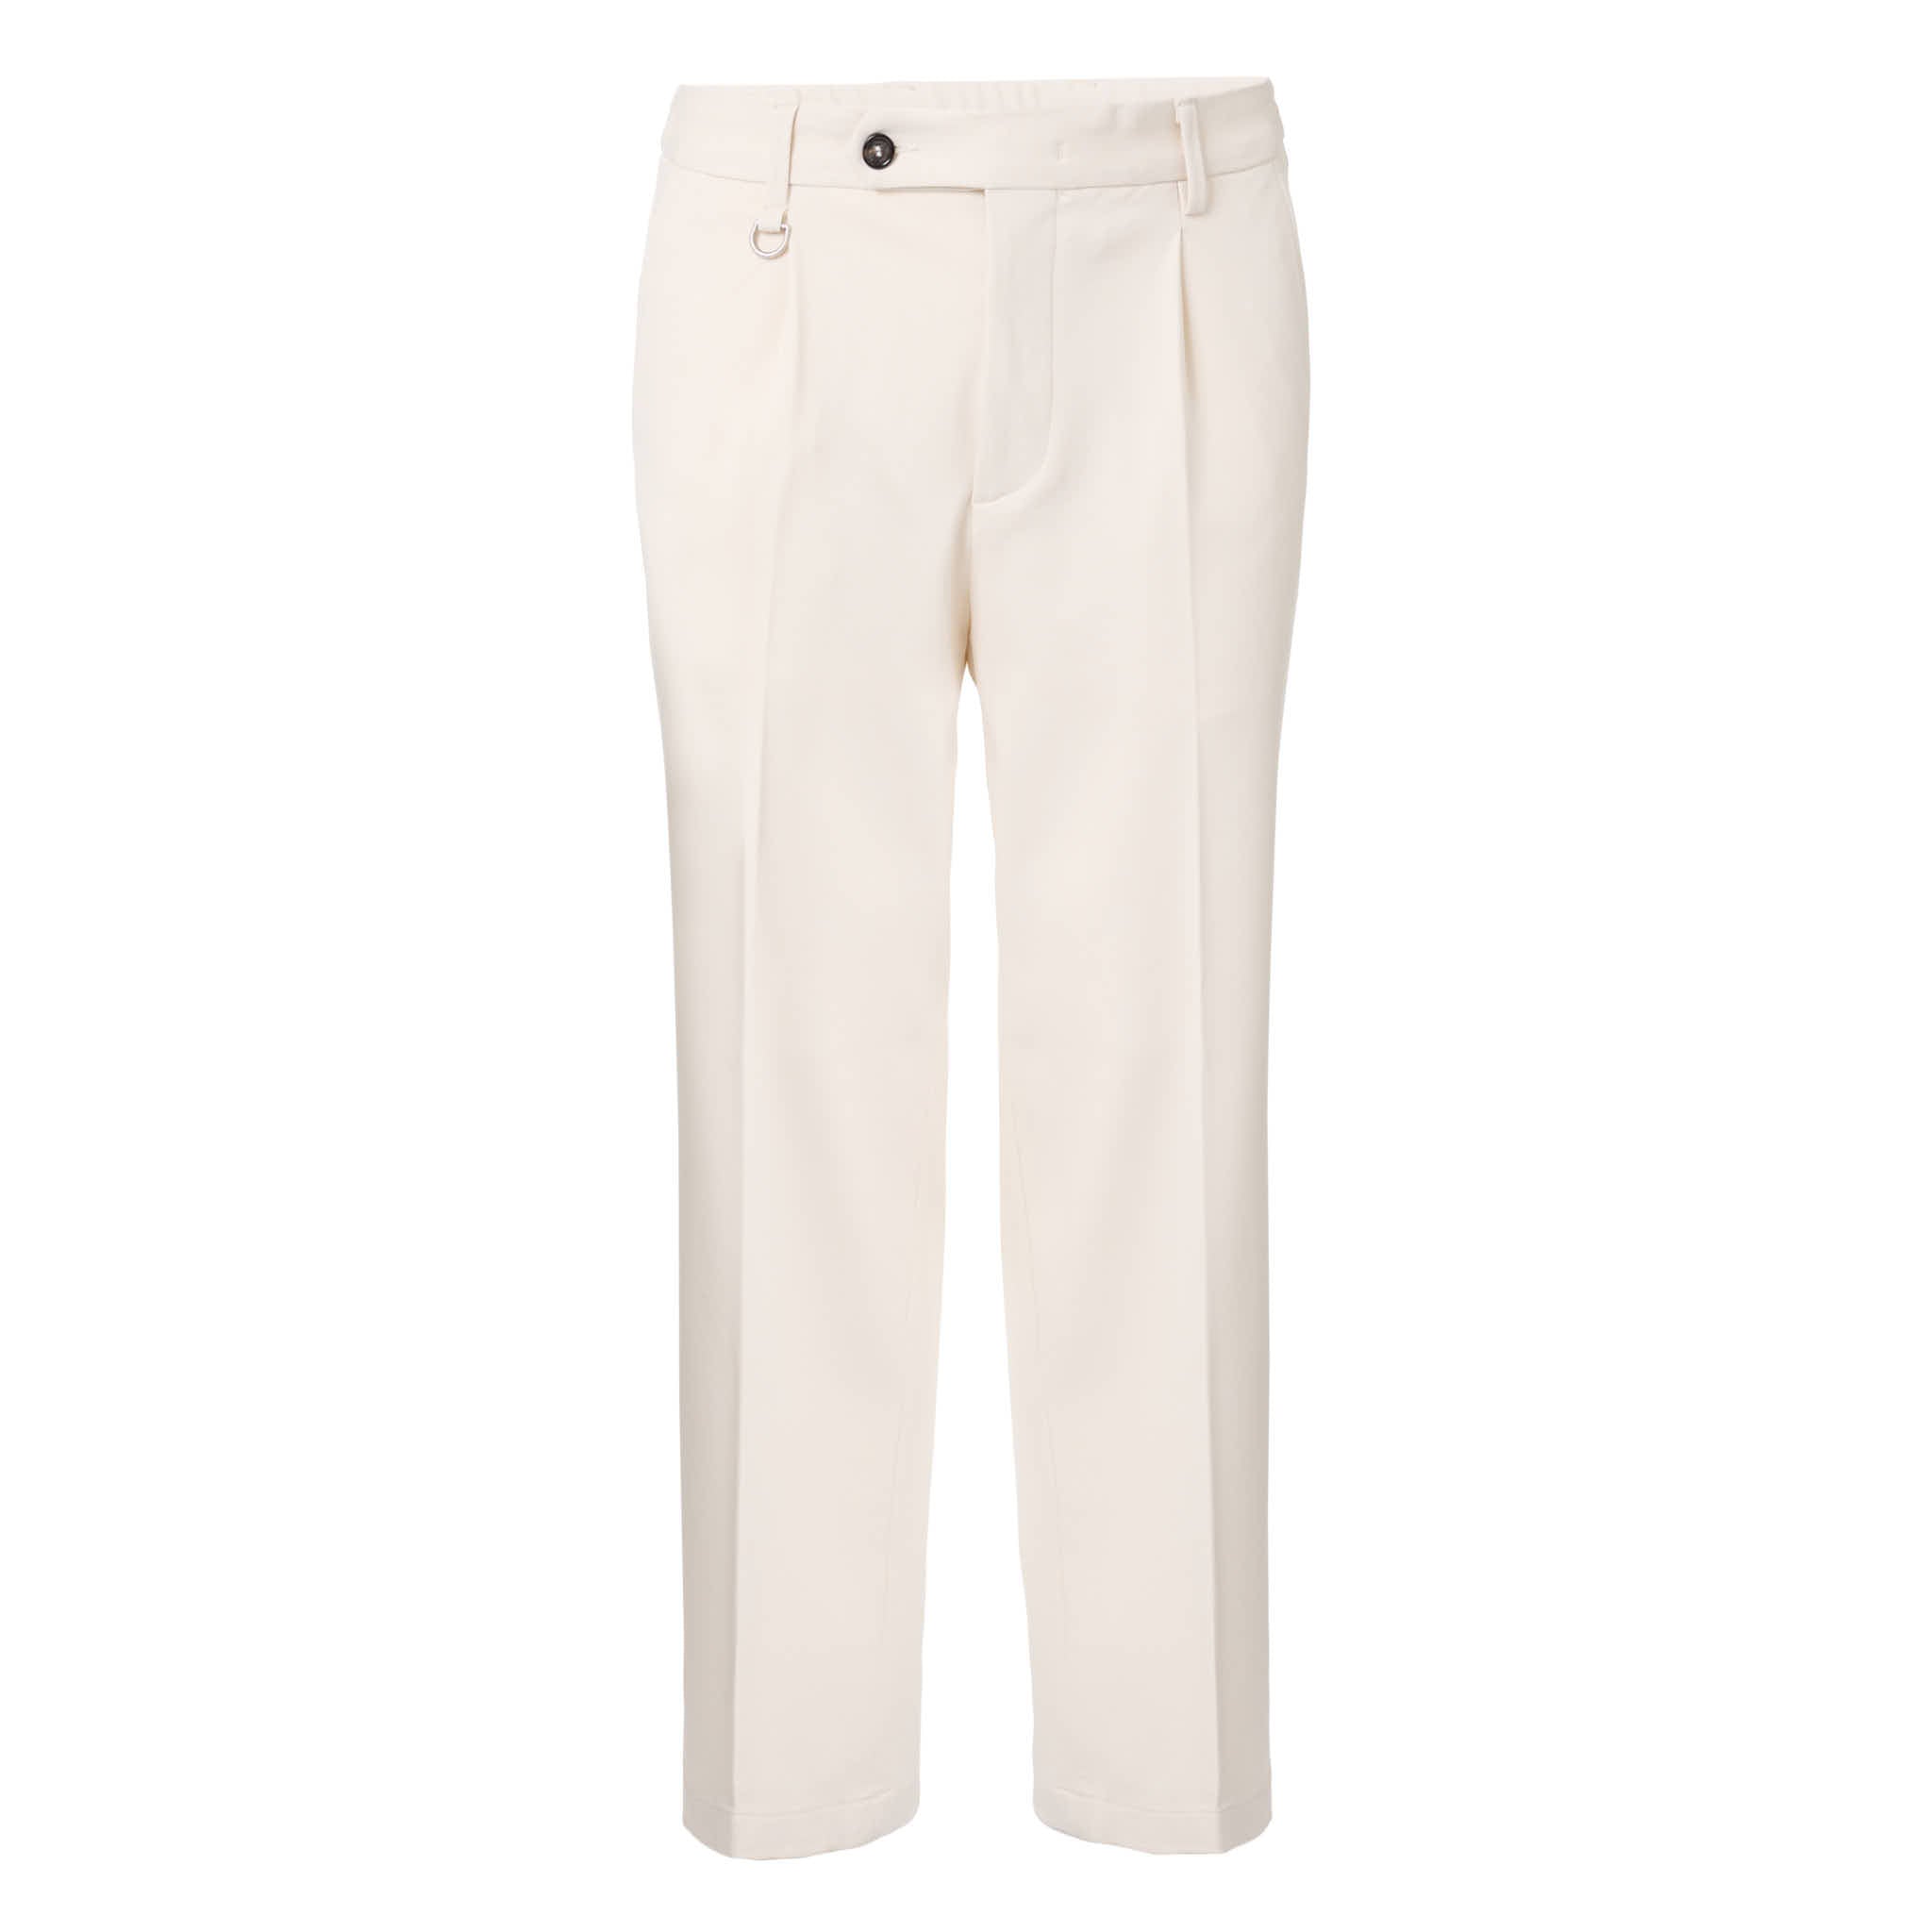 Pantalone Sartoriale in Jersey - Bianco Ecru Paolo Pecora